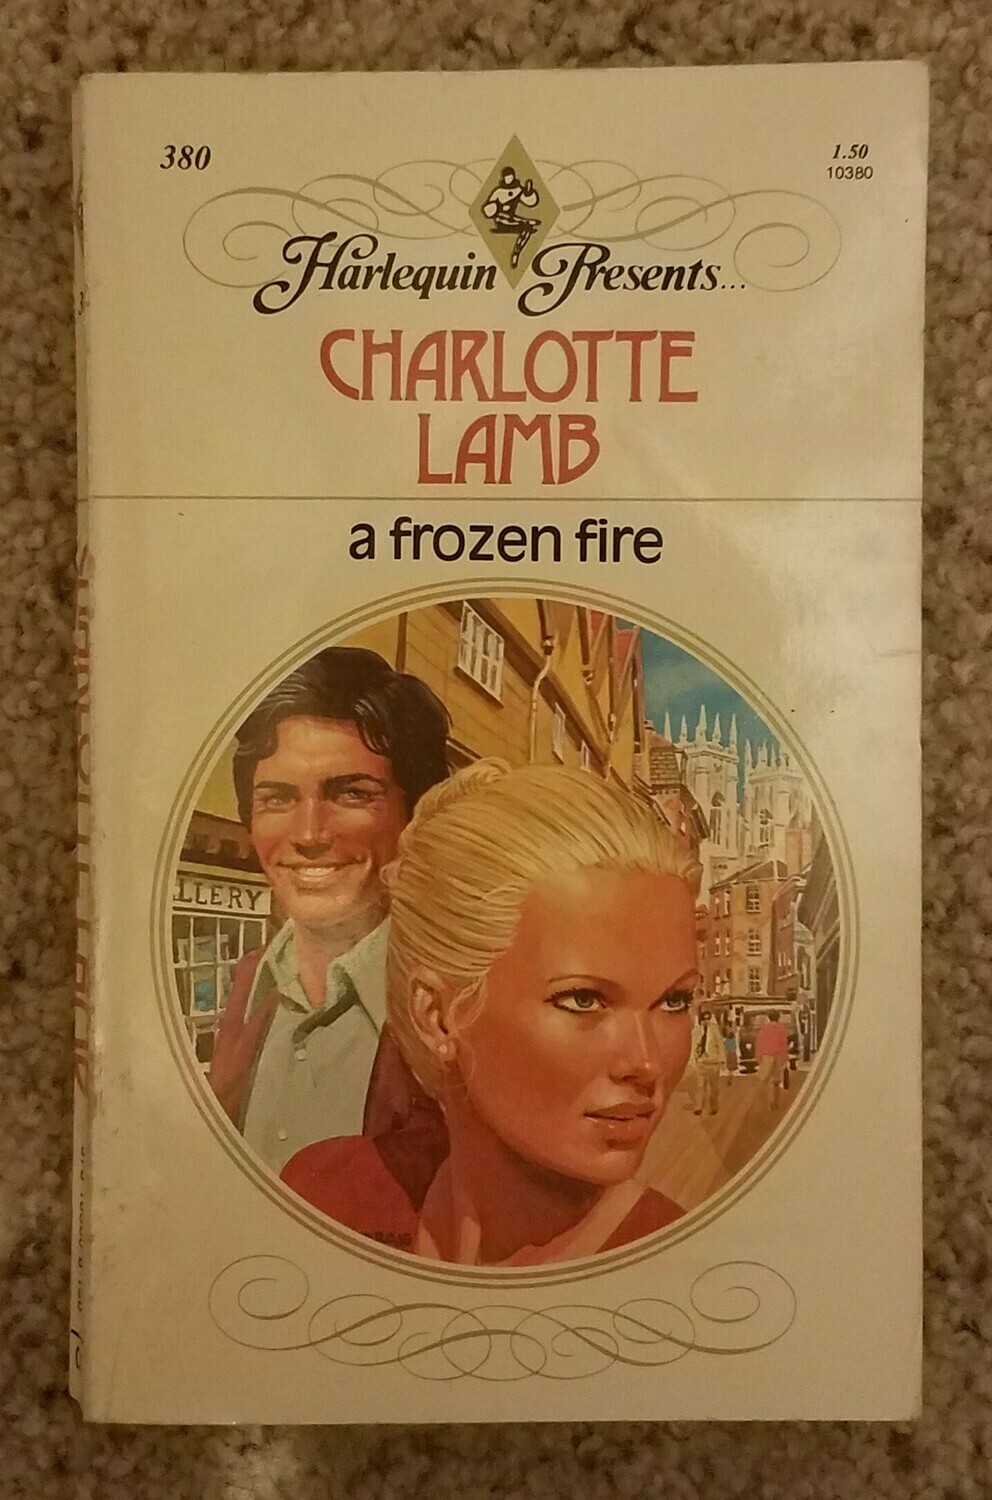 A Frozen Fire by Charlotte Lamb